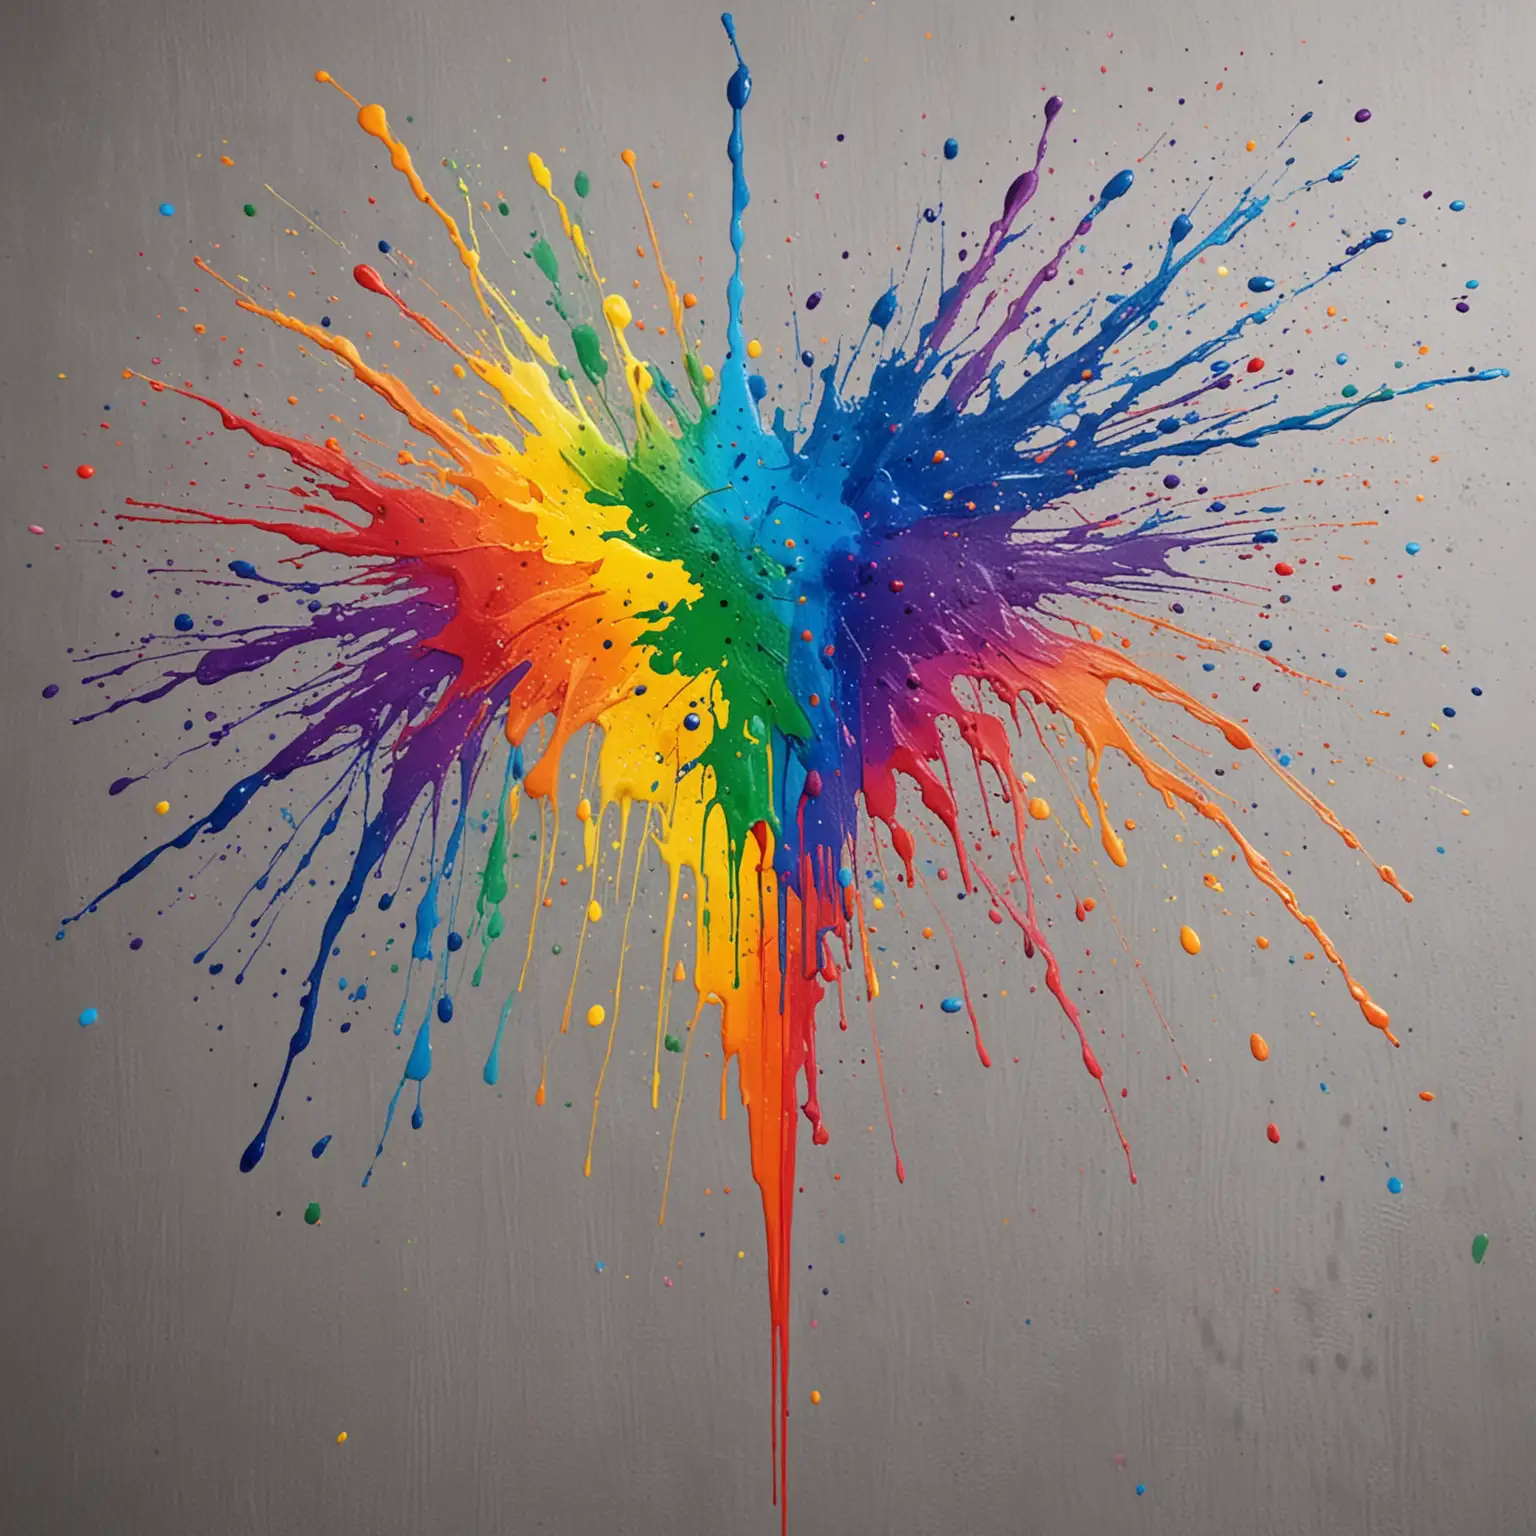  large rainbow colored paint splatter 

